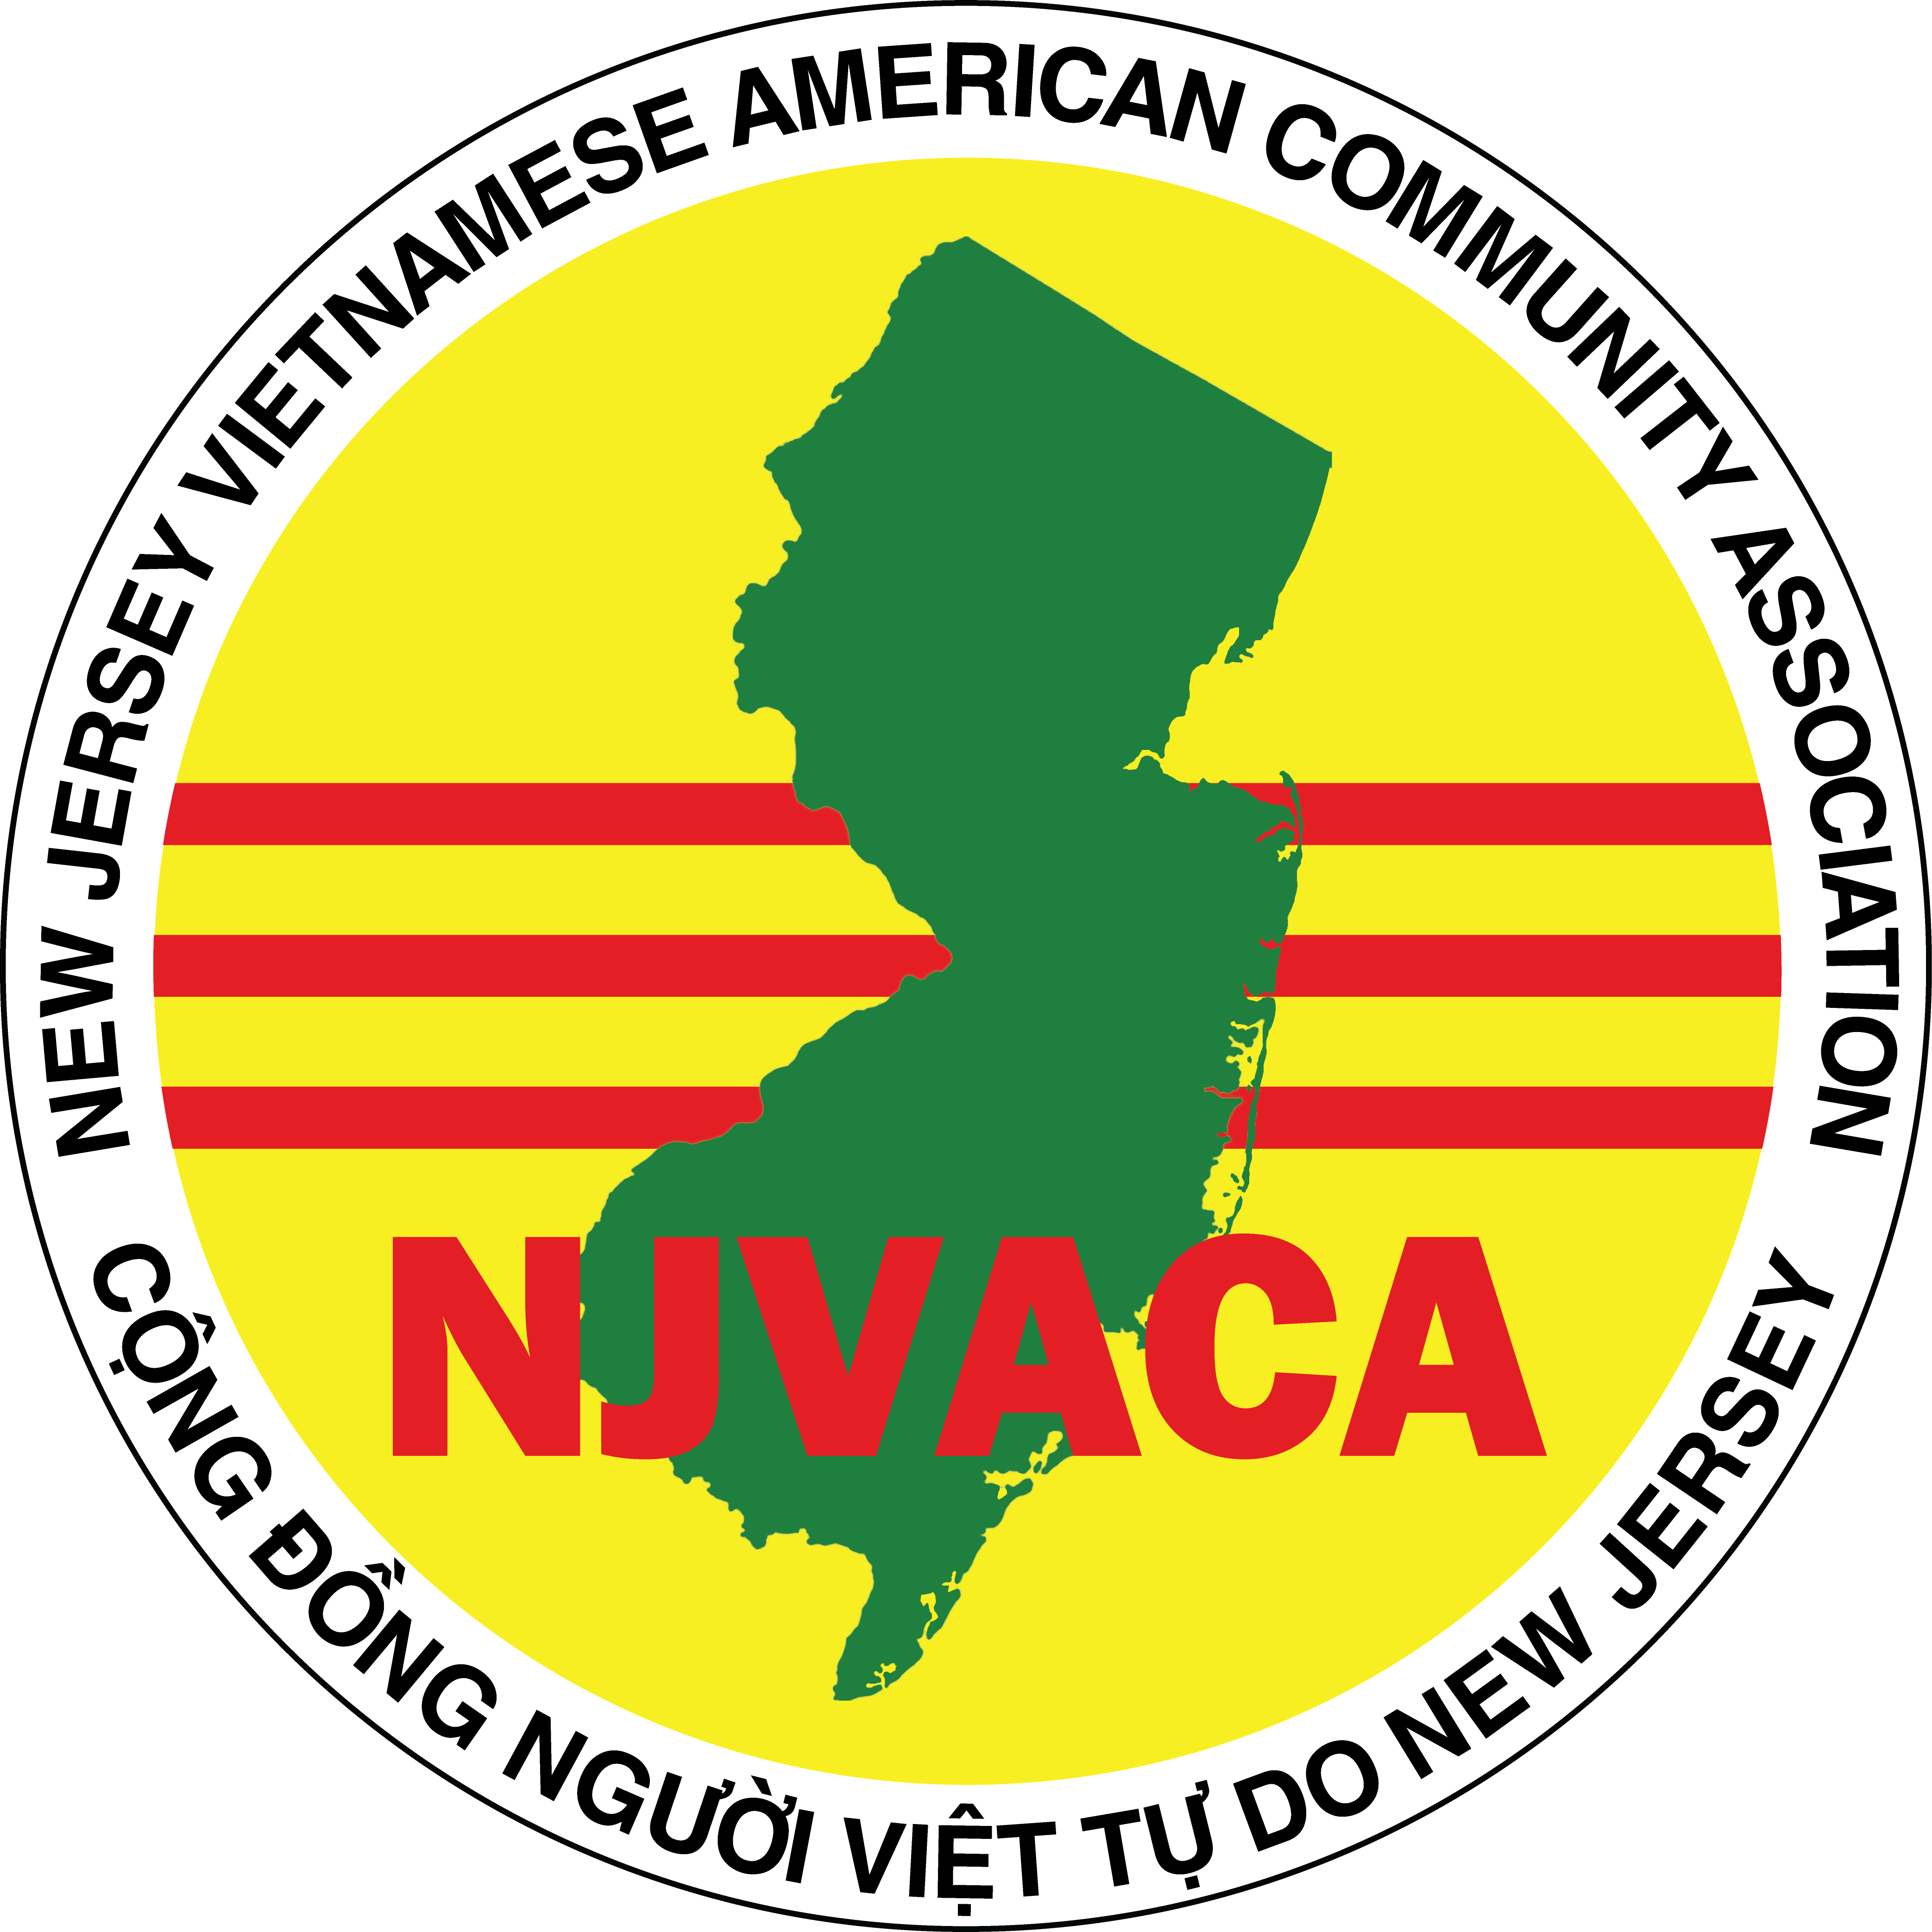 Vietnamese Cultural Organizations in USA - New Jersey Vietnamese-American Community Association